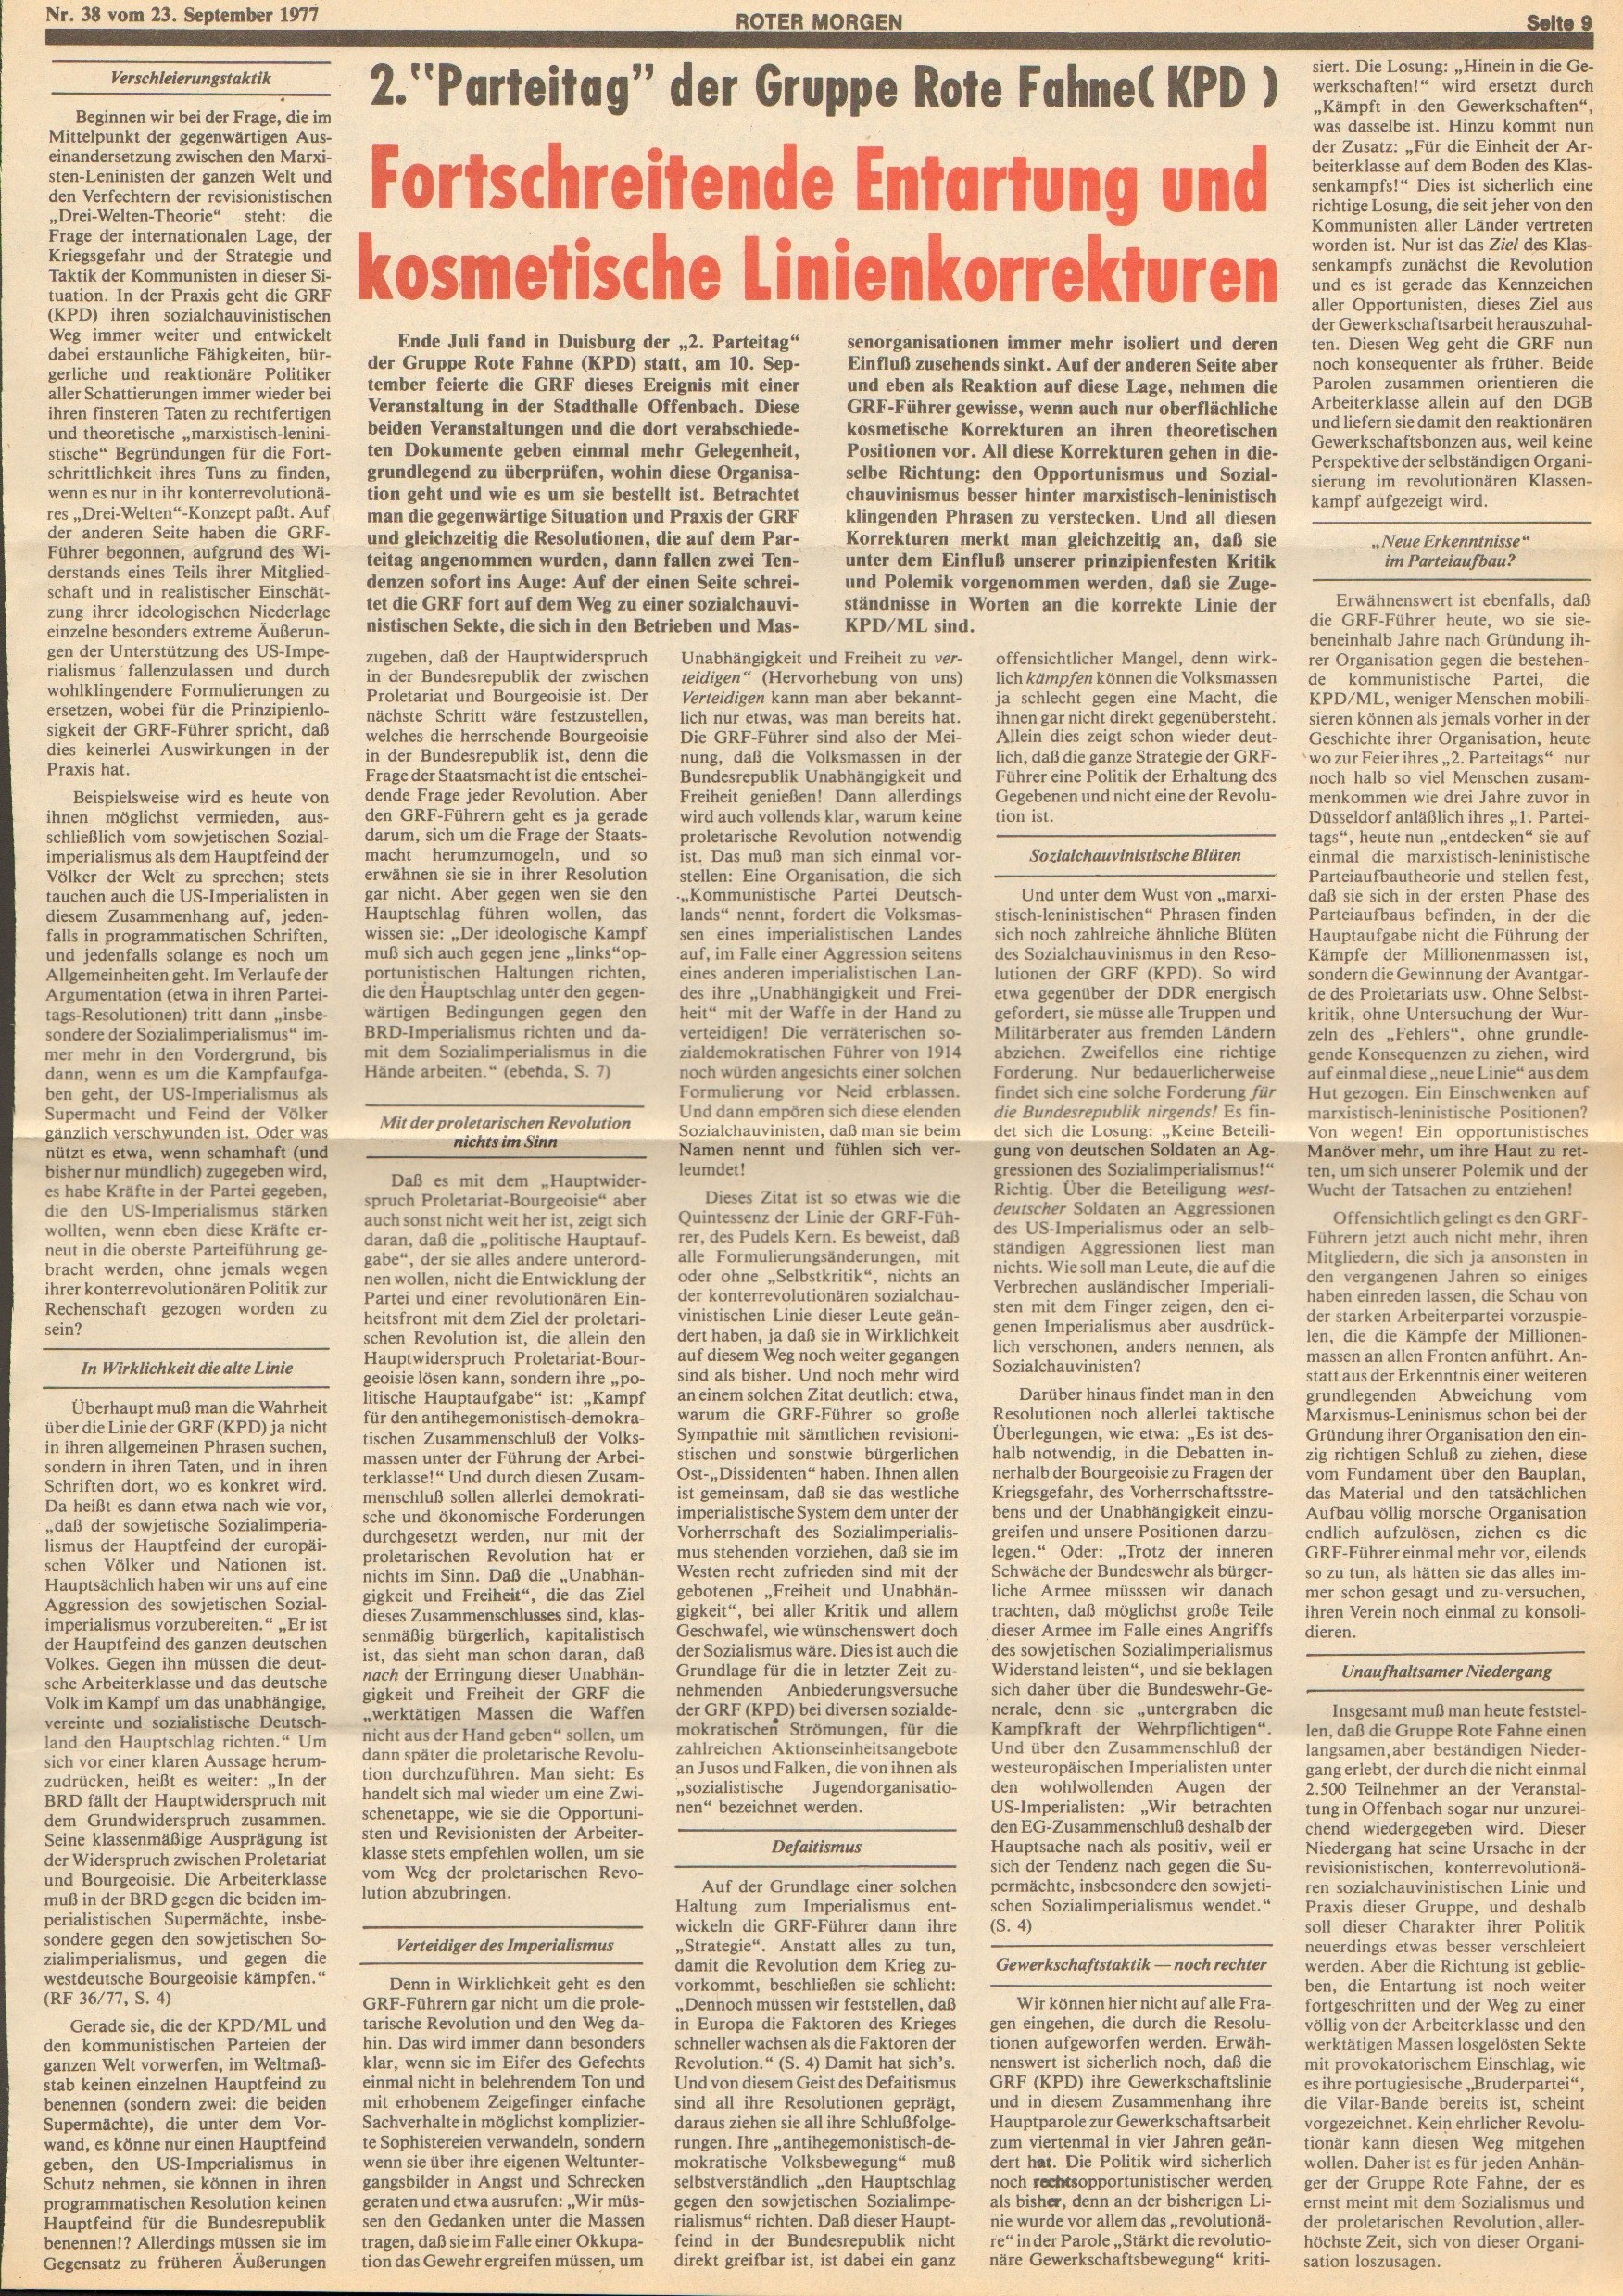 Roter Morgen, 11. Jg., 23. September 1977, Nr. 38, Seite 9